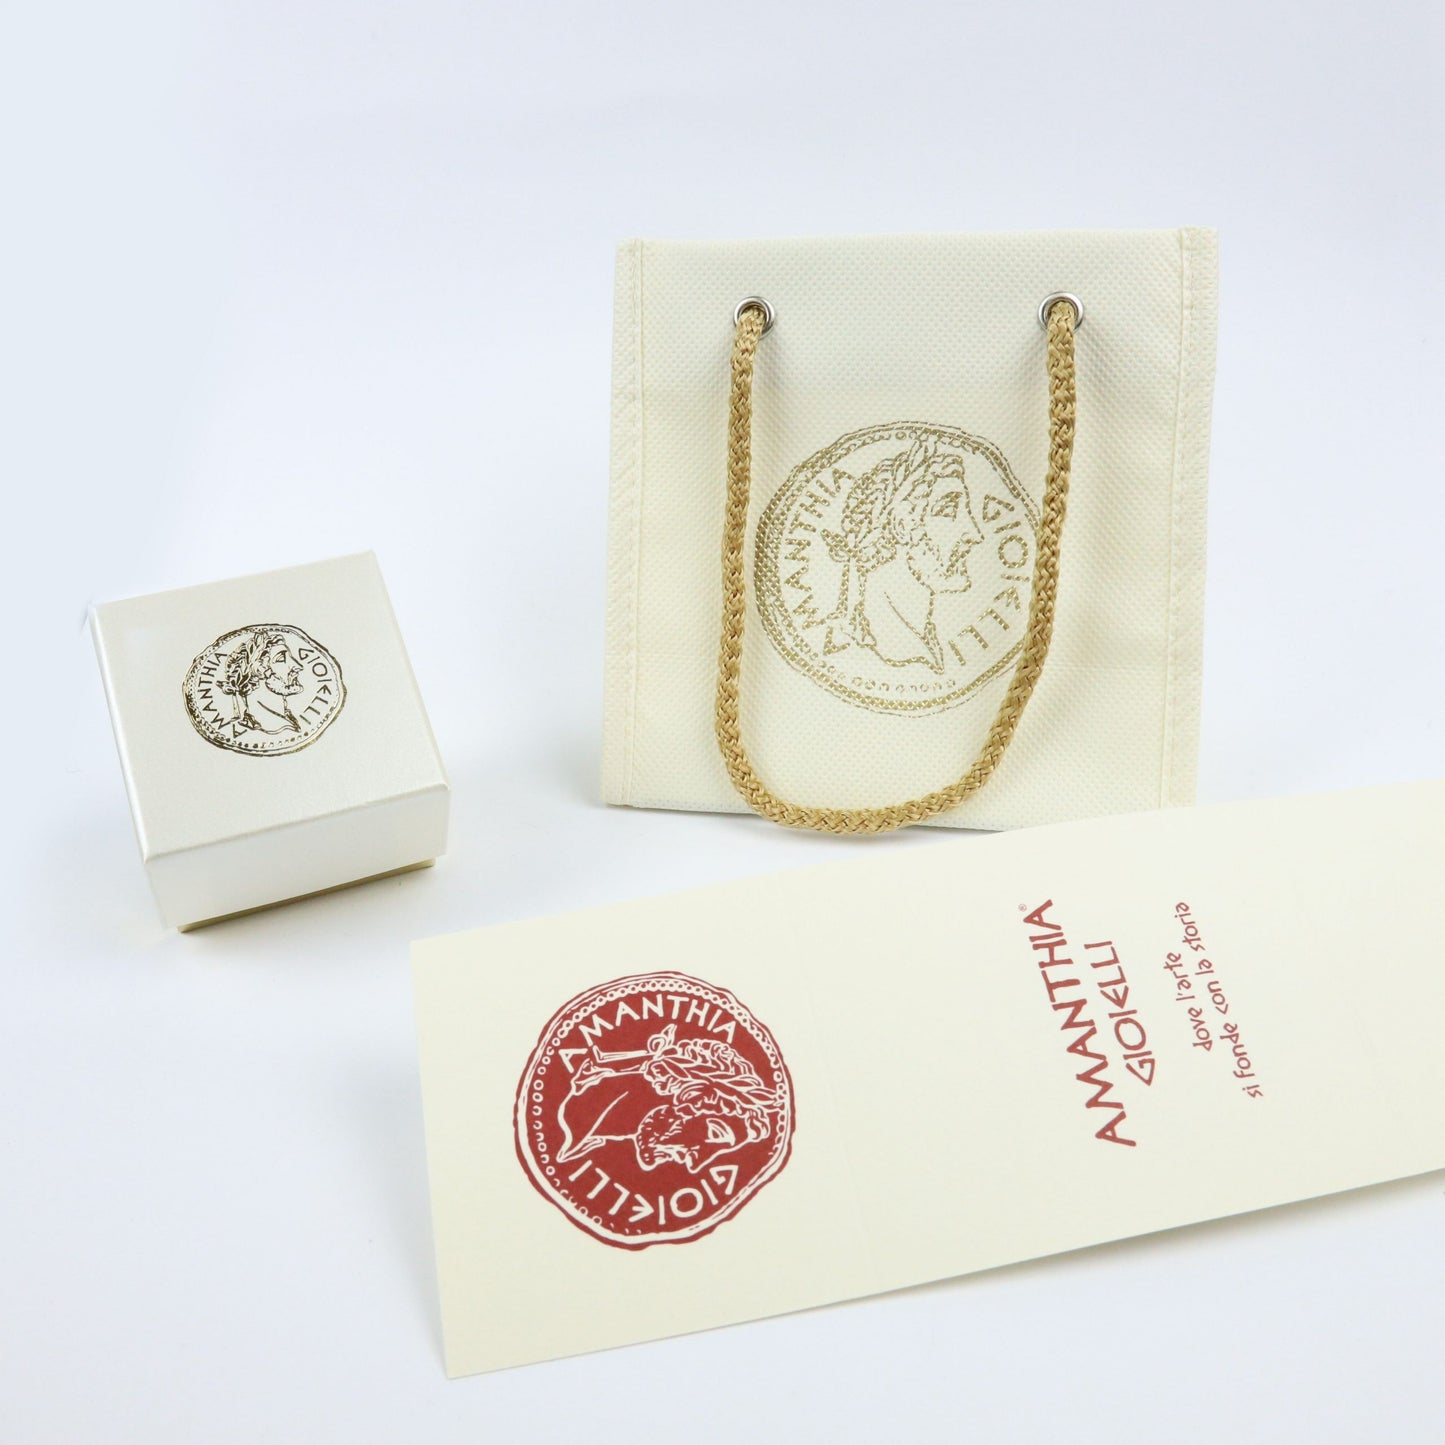 Bracciale rigido 7 fili in Argento con moneta d'epoca - BR.016  Amanthia   